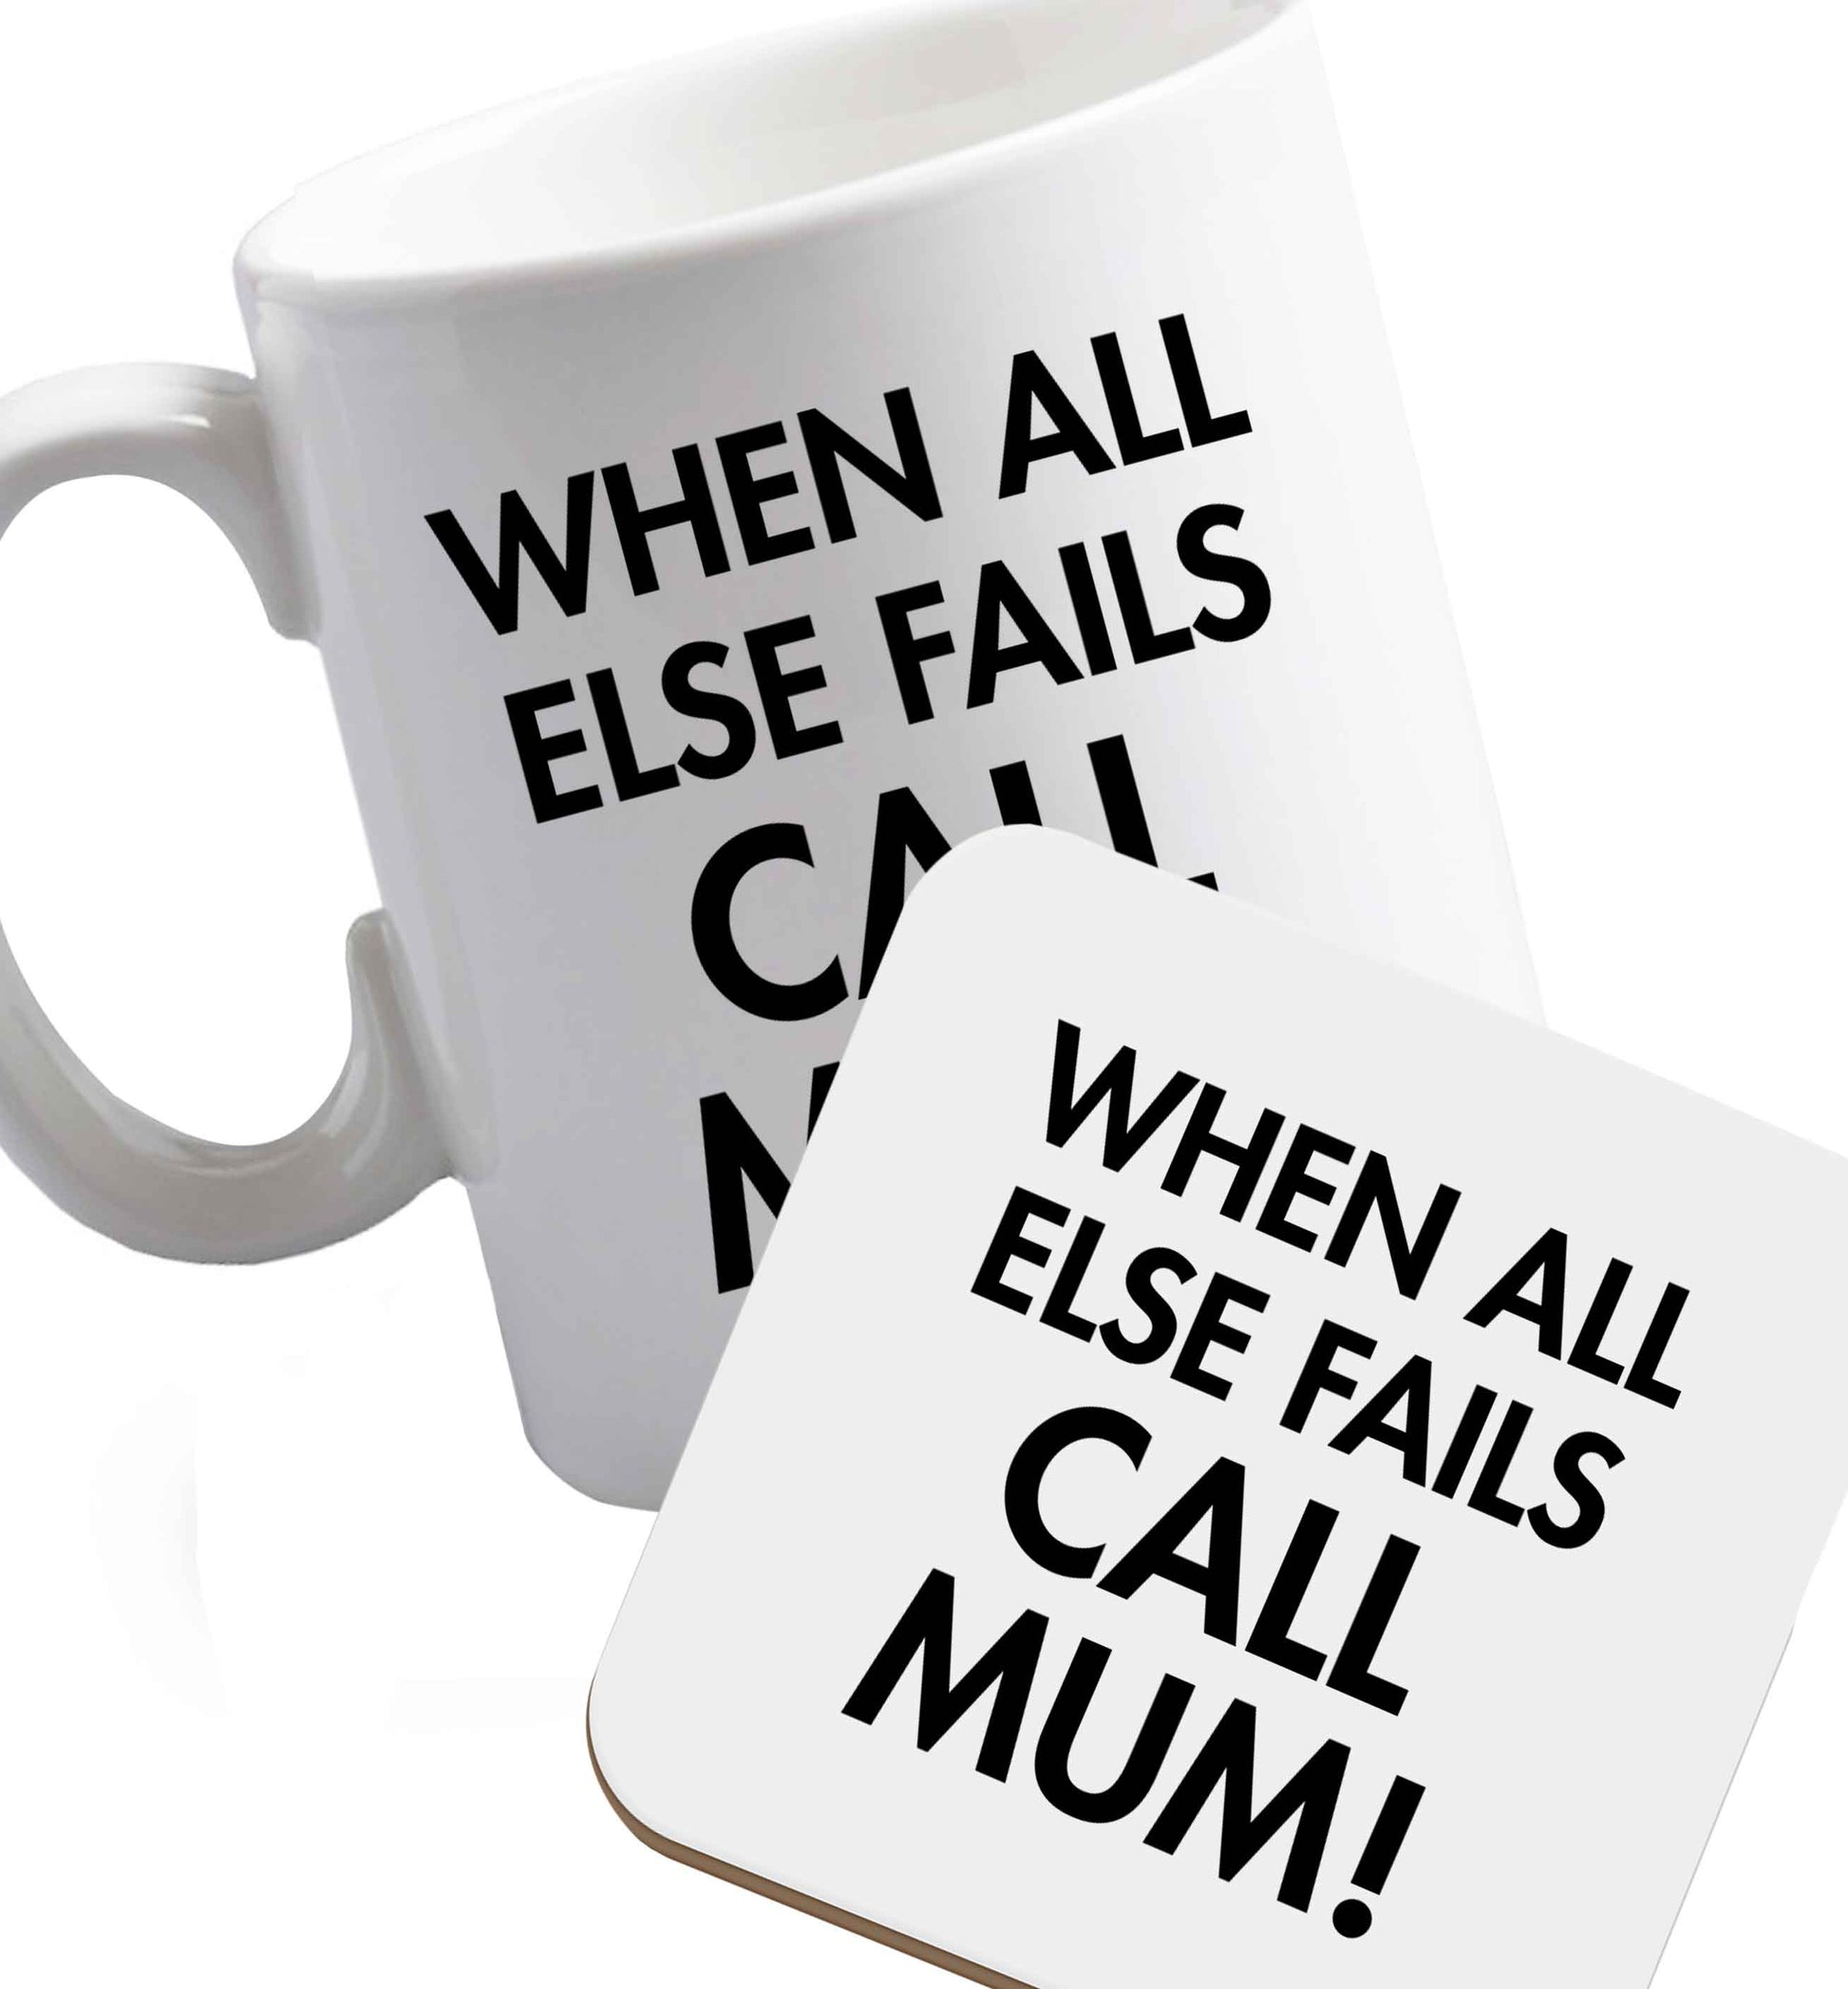 10 oz When all else fails call mum! ceramic mug and coaster set right handed